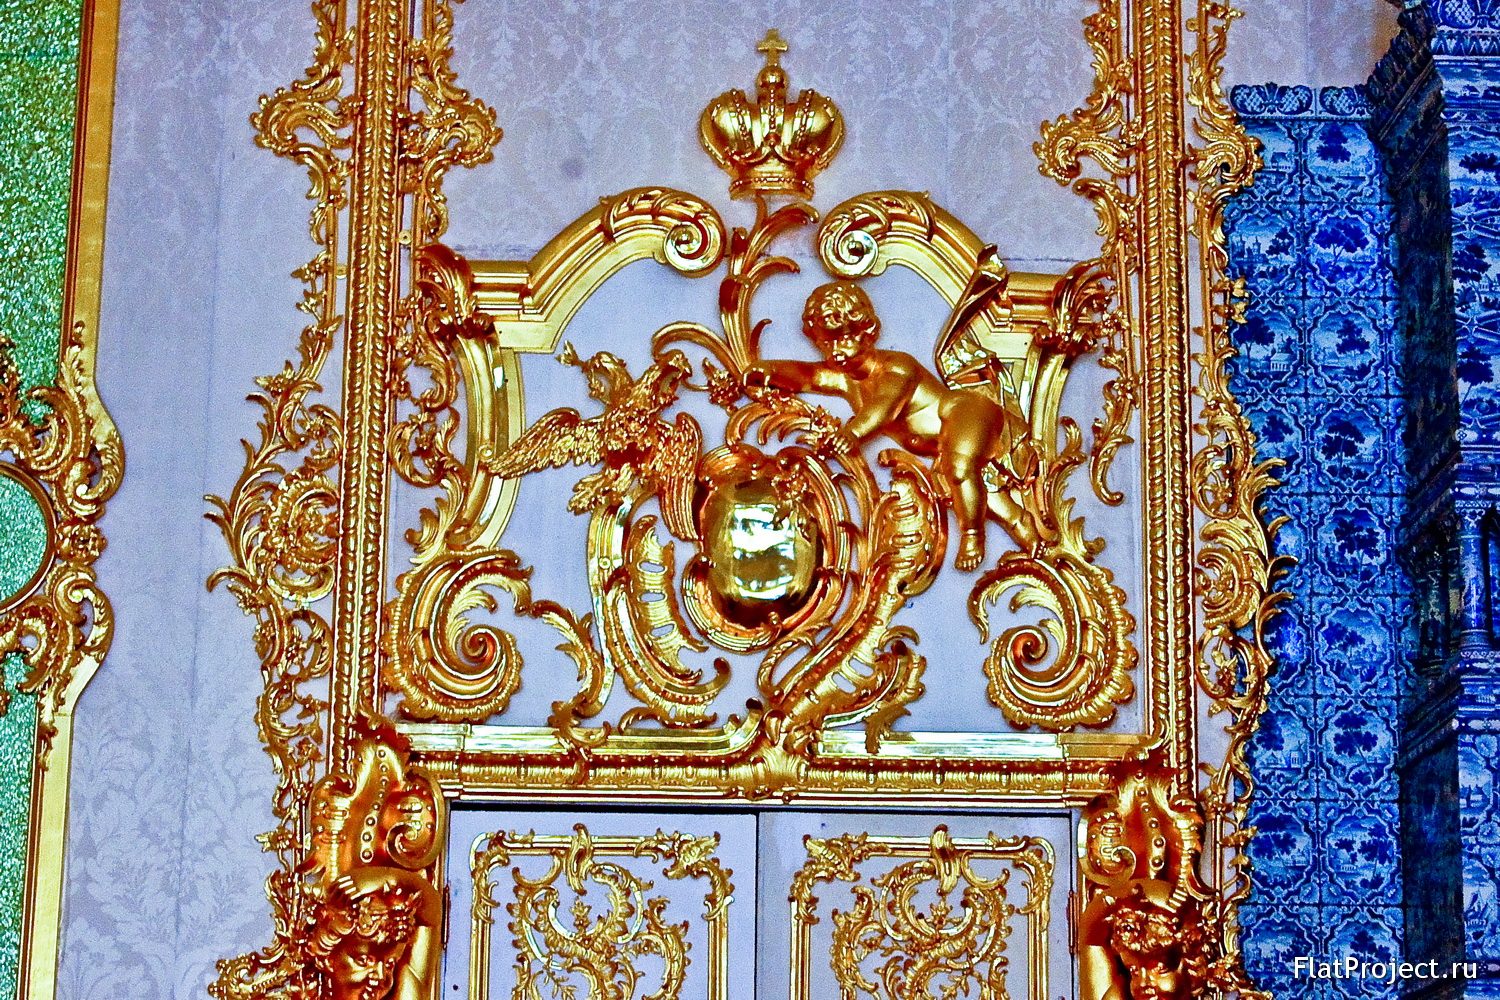 The Catherine Palace interiors – photo 161